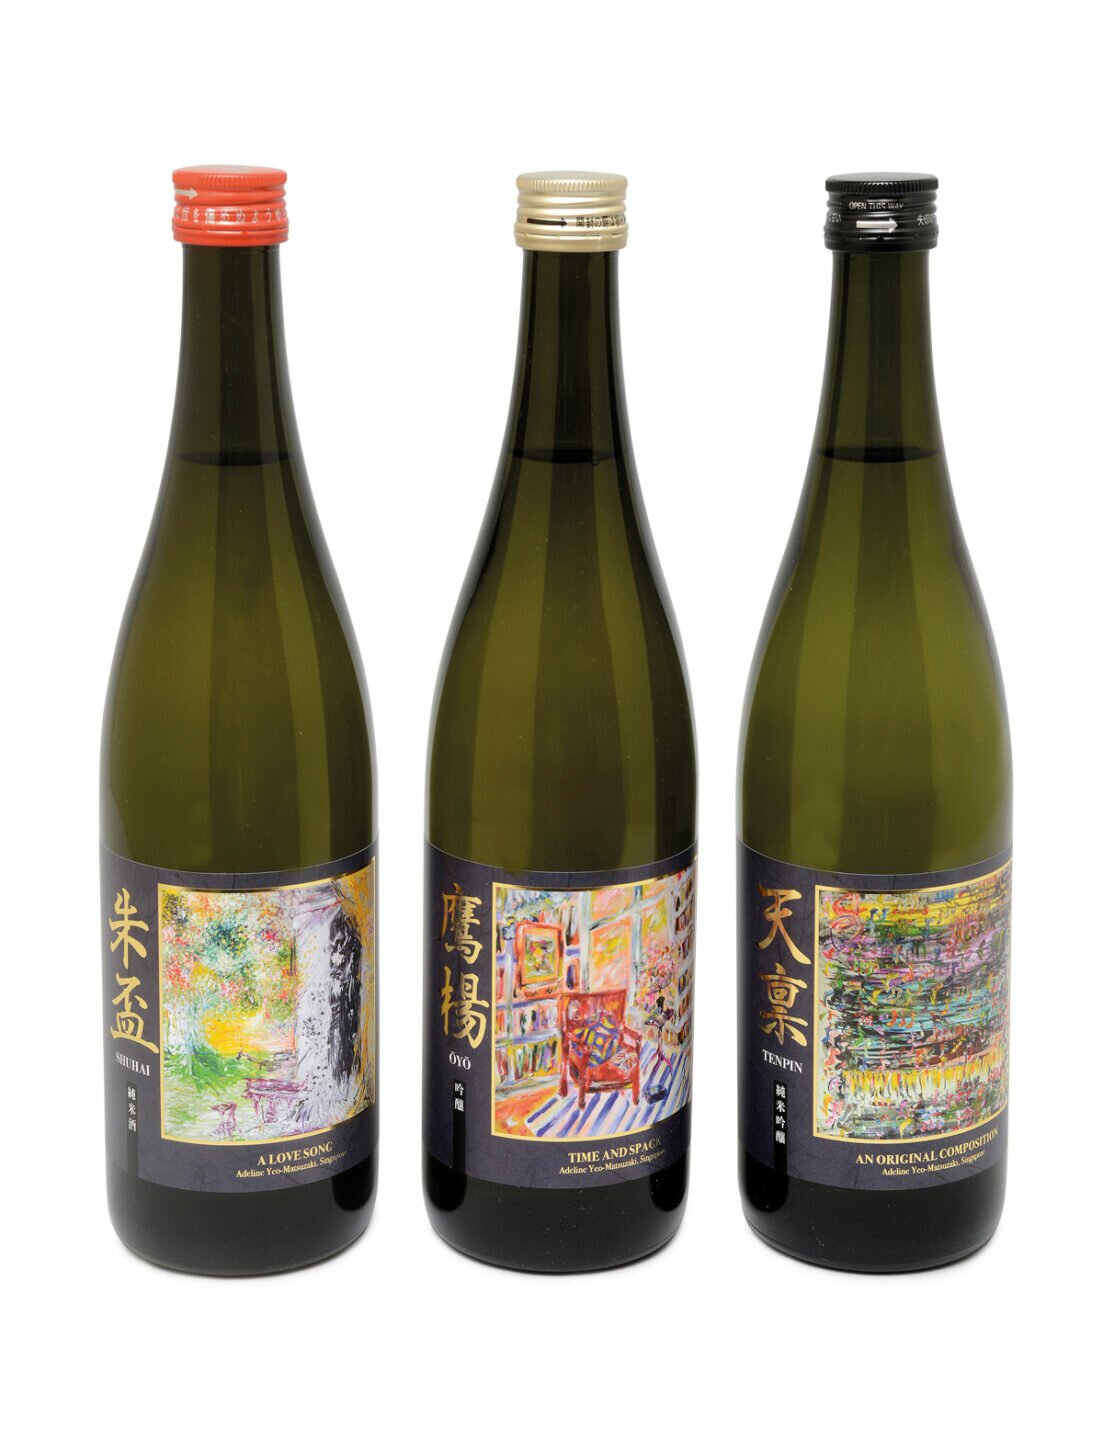 Chiyonosono Sake Brewery’s Collaboration With Adeline Yeo-Matsuzaki Explores The Artistry of Sake